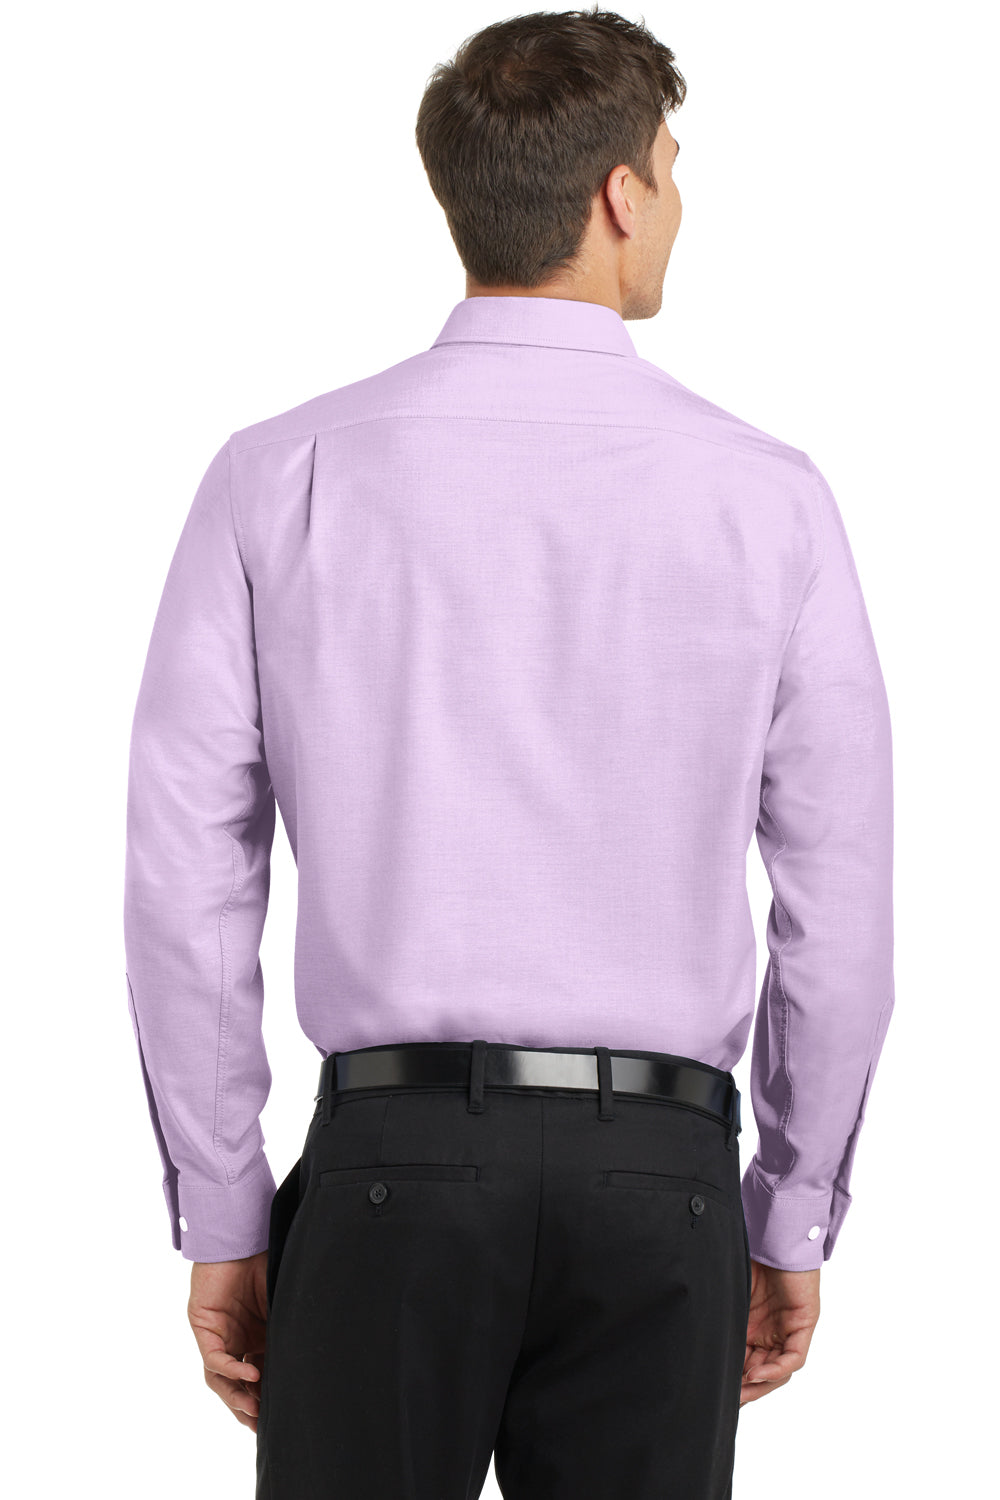 Port Authority S658 Mens SuperPro Oxford Wrinkle Resistant Long Sleeve Button Down Shirt w/ Pocket Purple Back